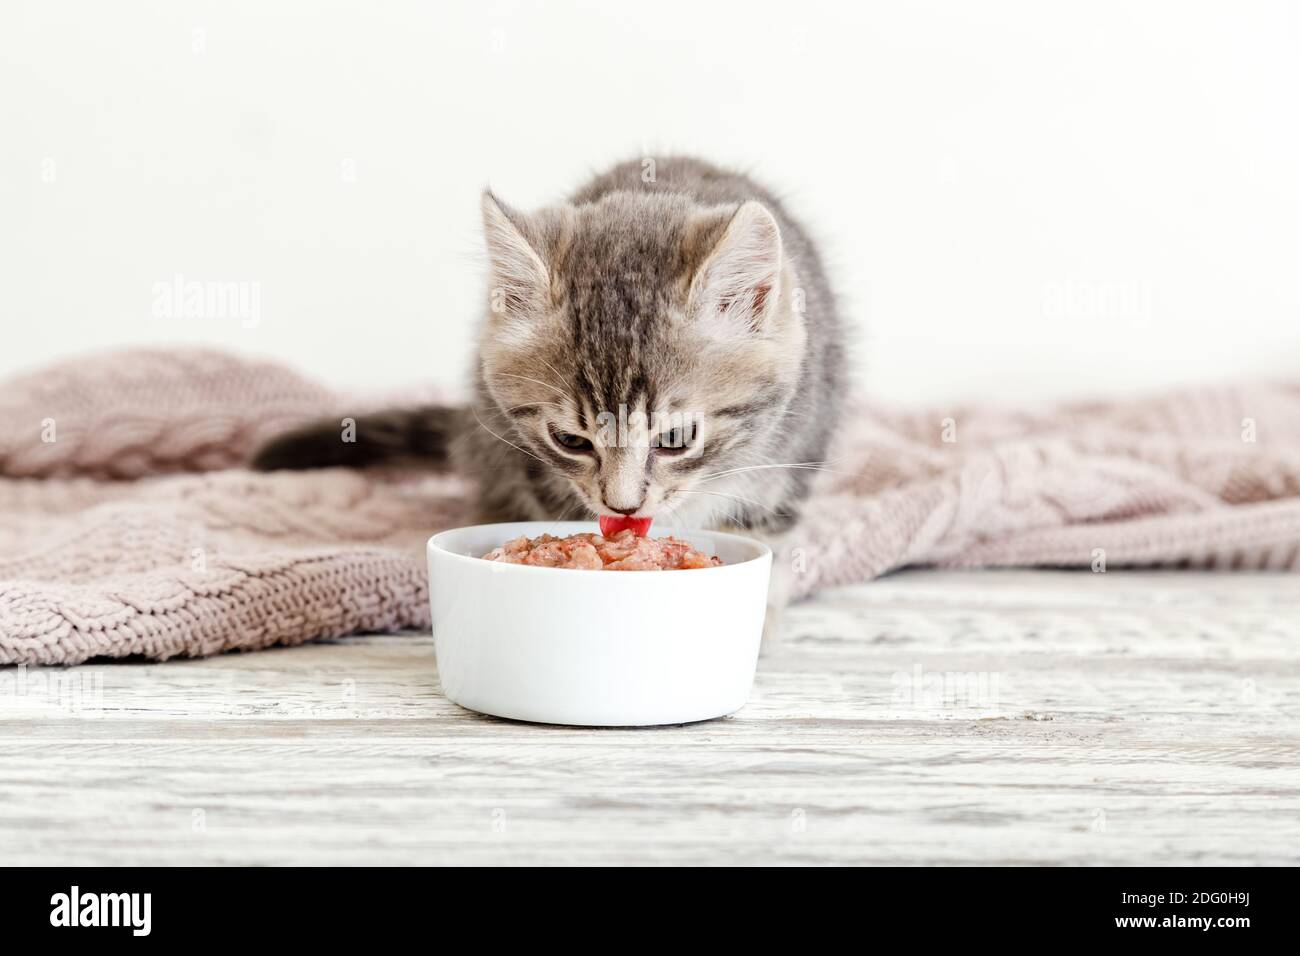 Tabby kitten eating food from white bowl on wooden floor. Baby cat eat junior food. Portrait of kitten while eating Stock Photo